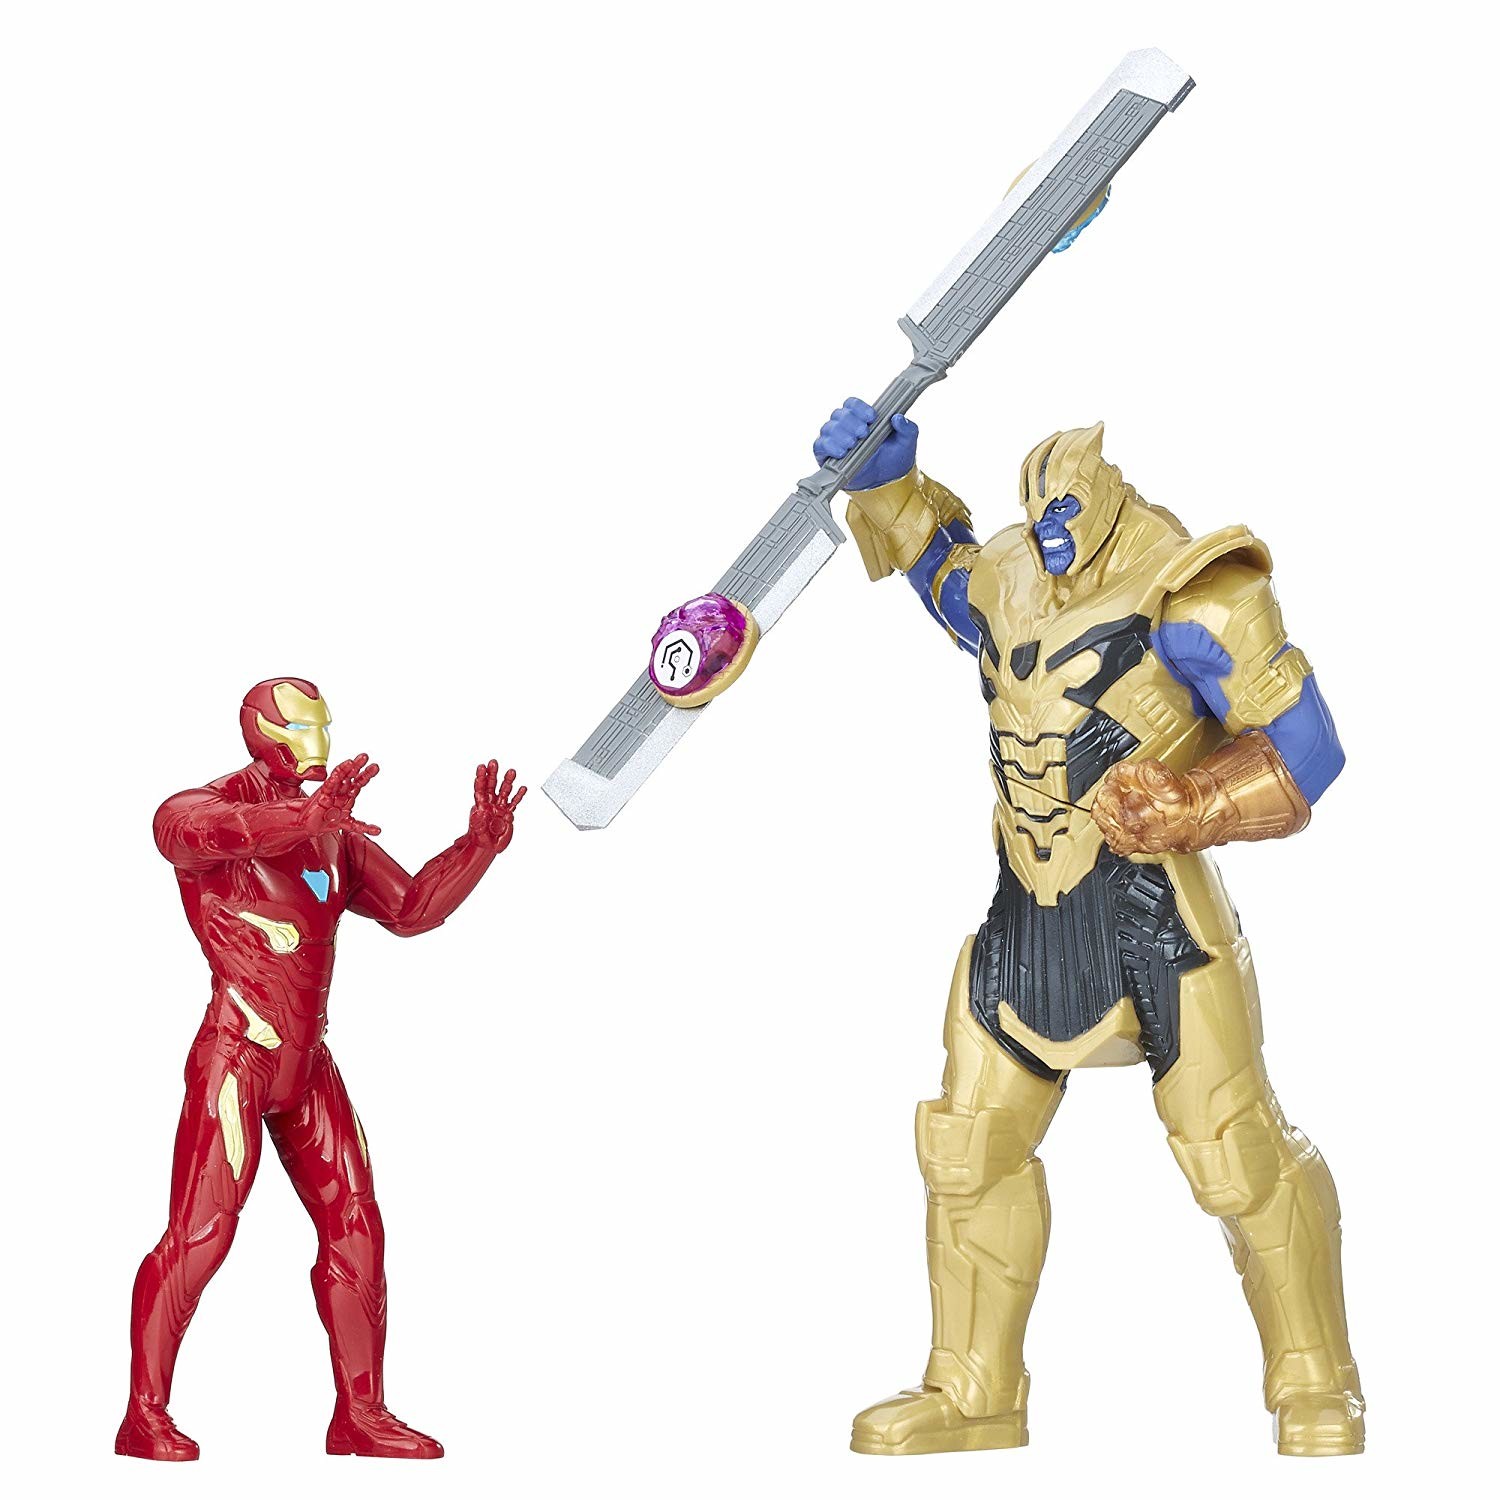 Avengers Infinity War Coffret set de combat Thanos vs Iron Man